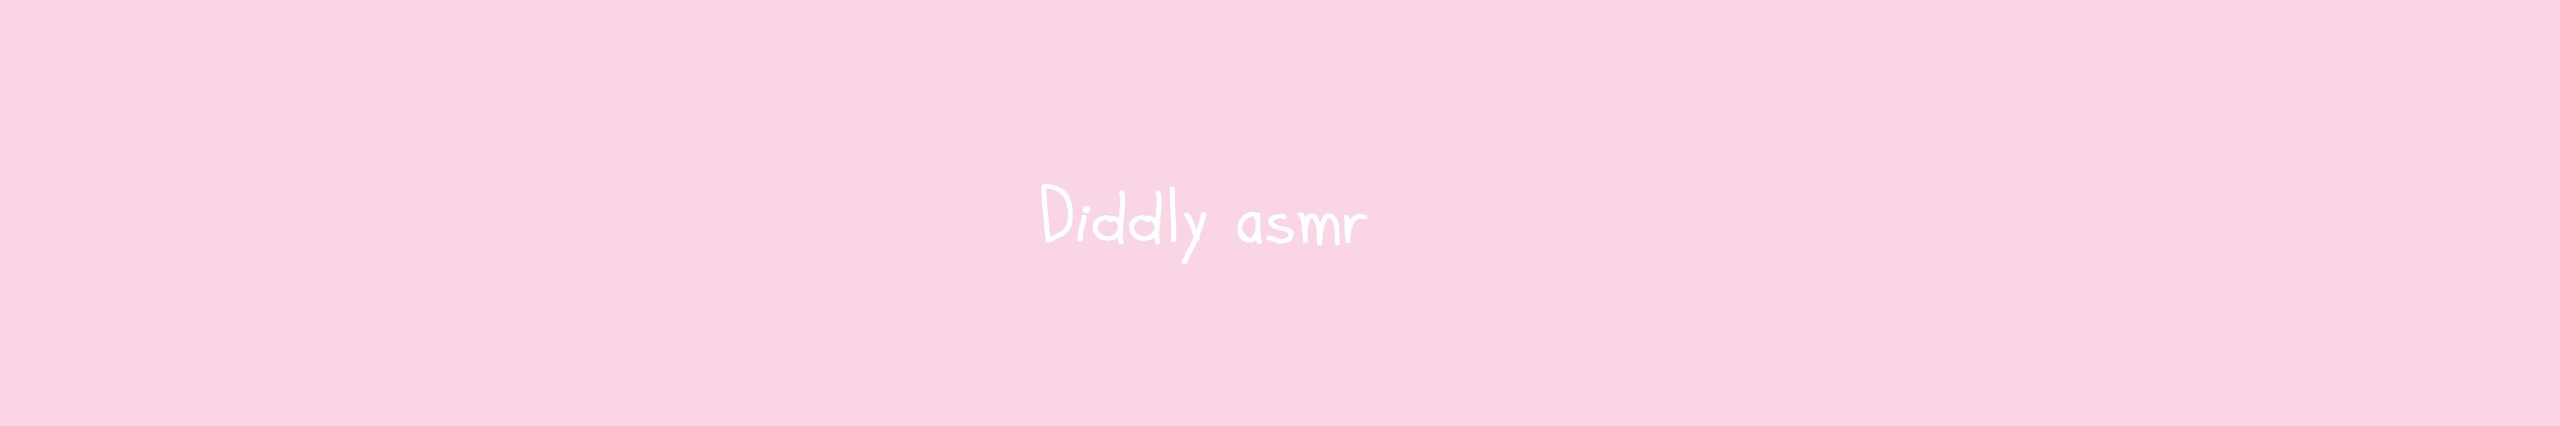 Diddly-ASMR_banner